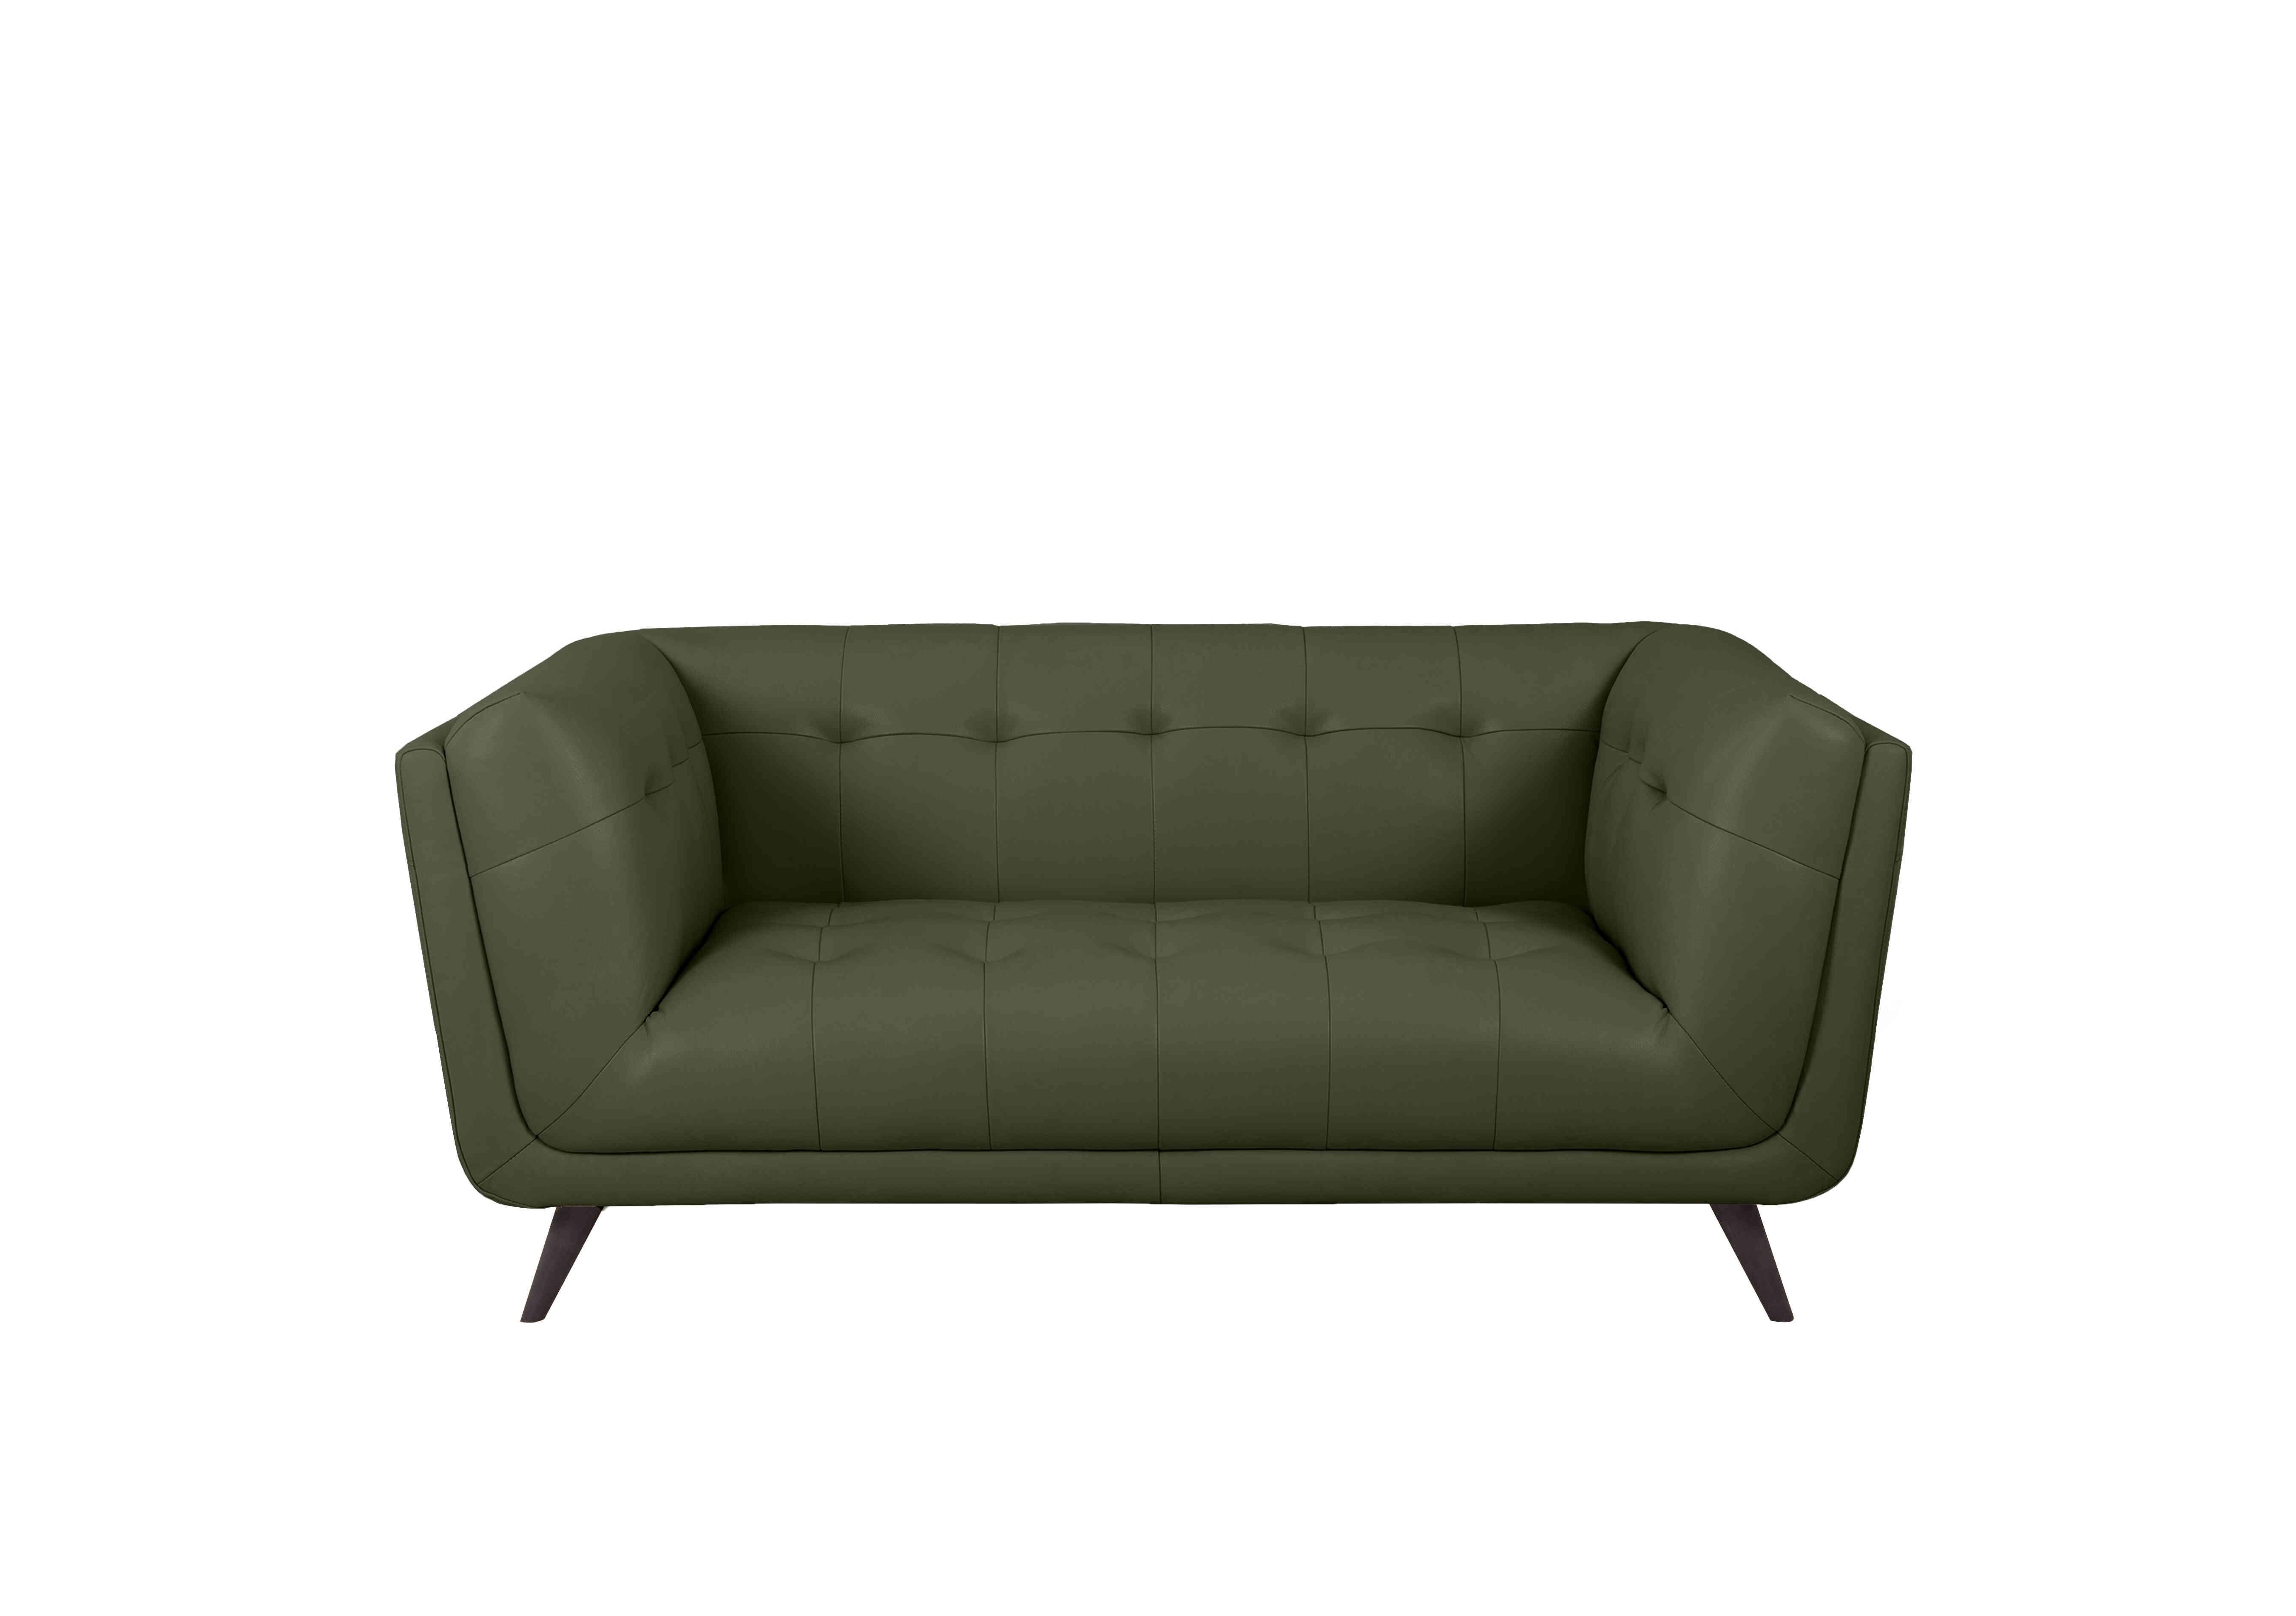 Rene 2 Seater Leather Sofa in Montana Oslo Pine on Furniture Village